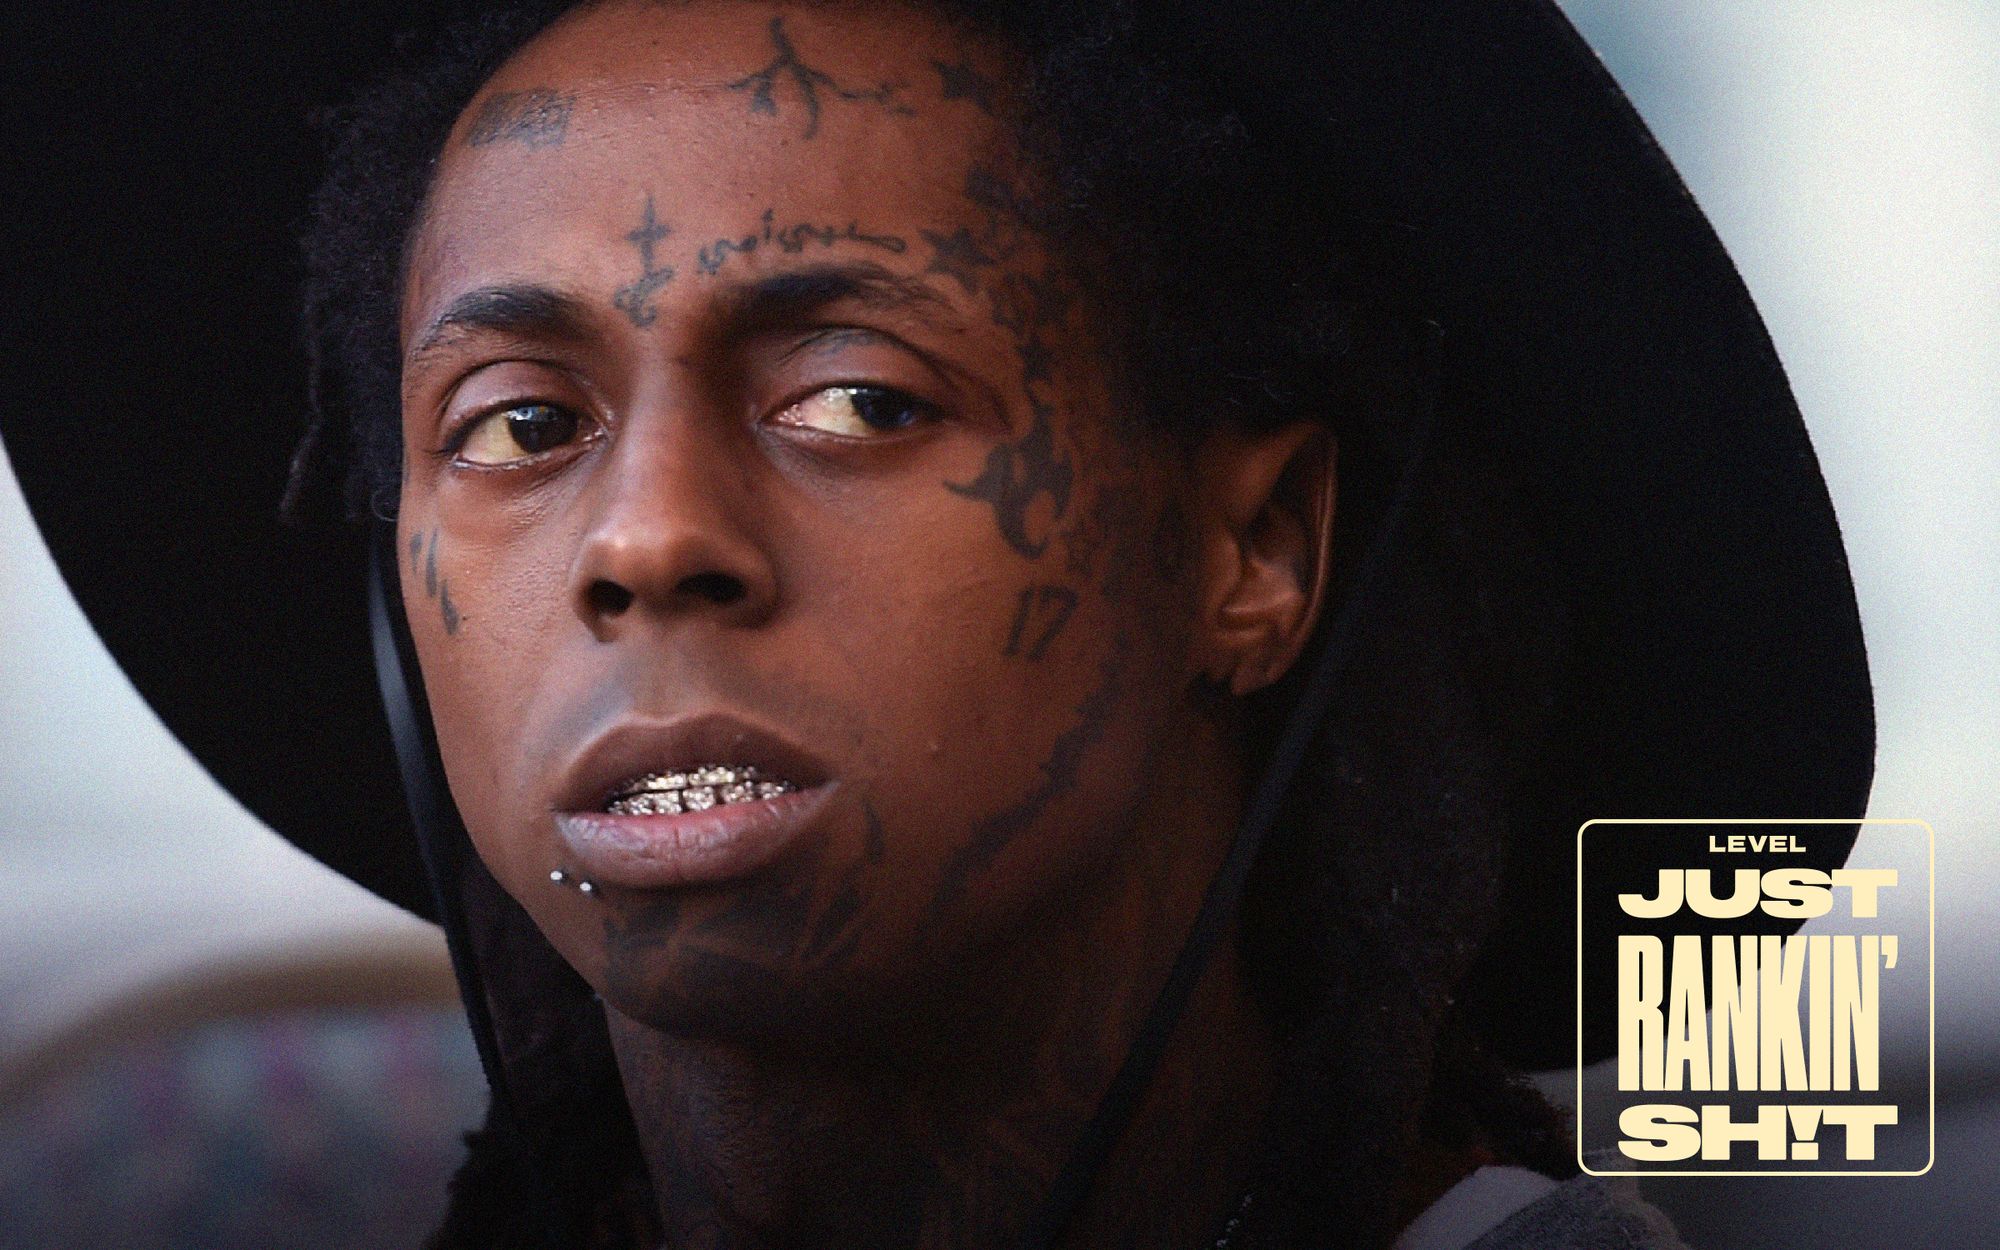 Lil Wayne Debuts New Face Tattoos